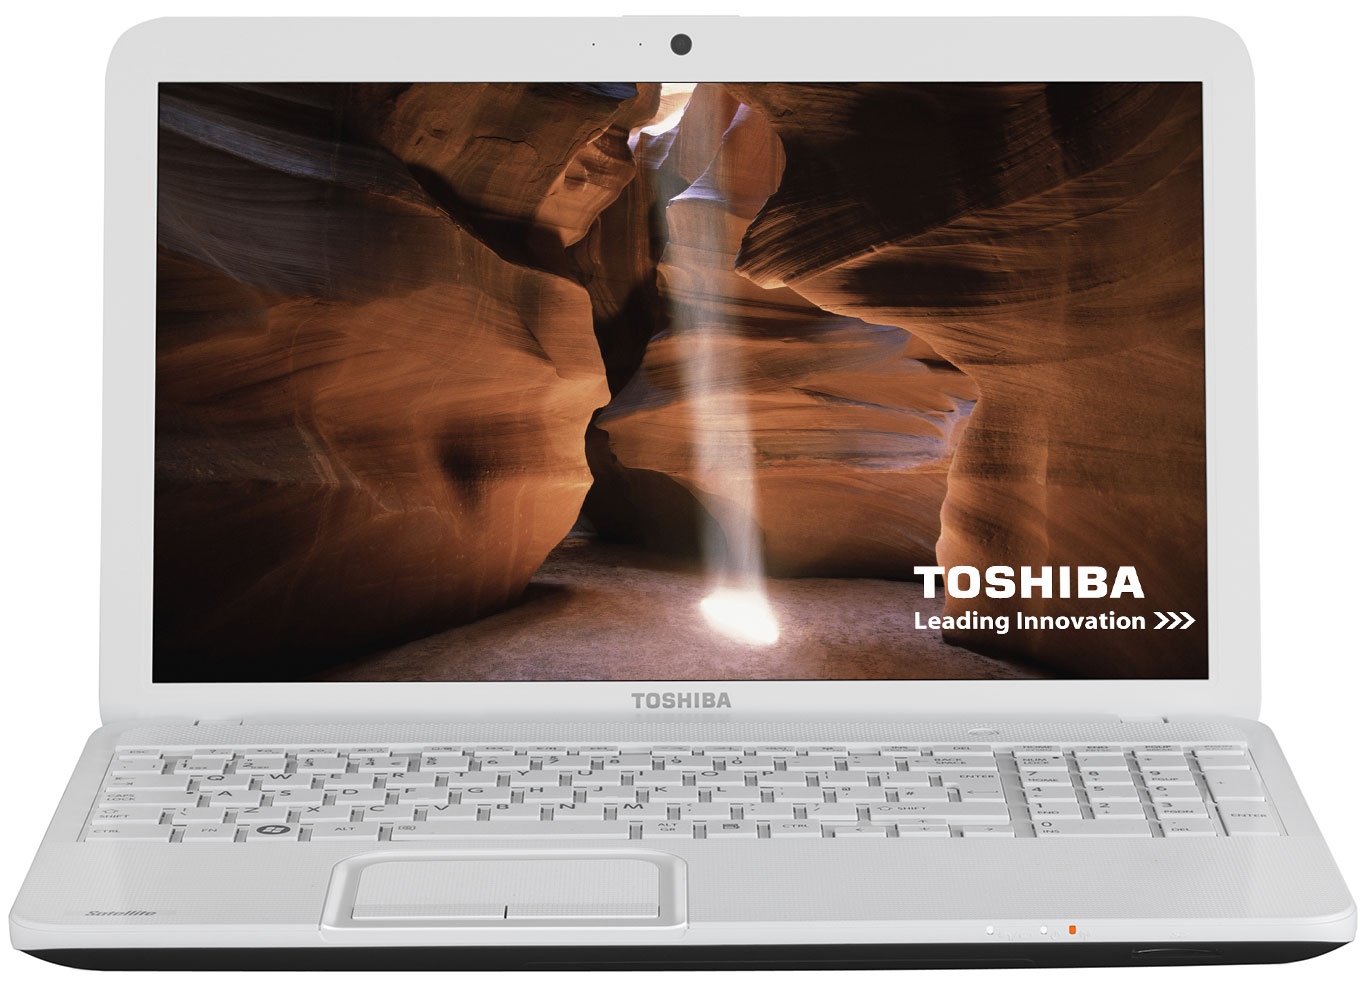 Toshiba notebook